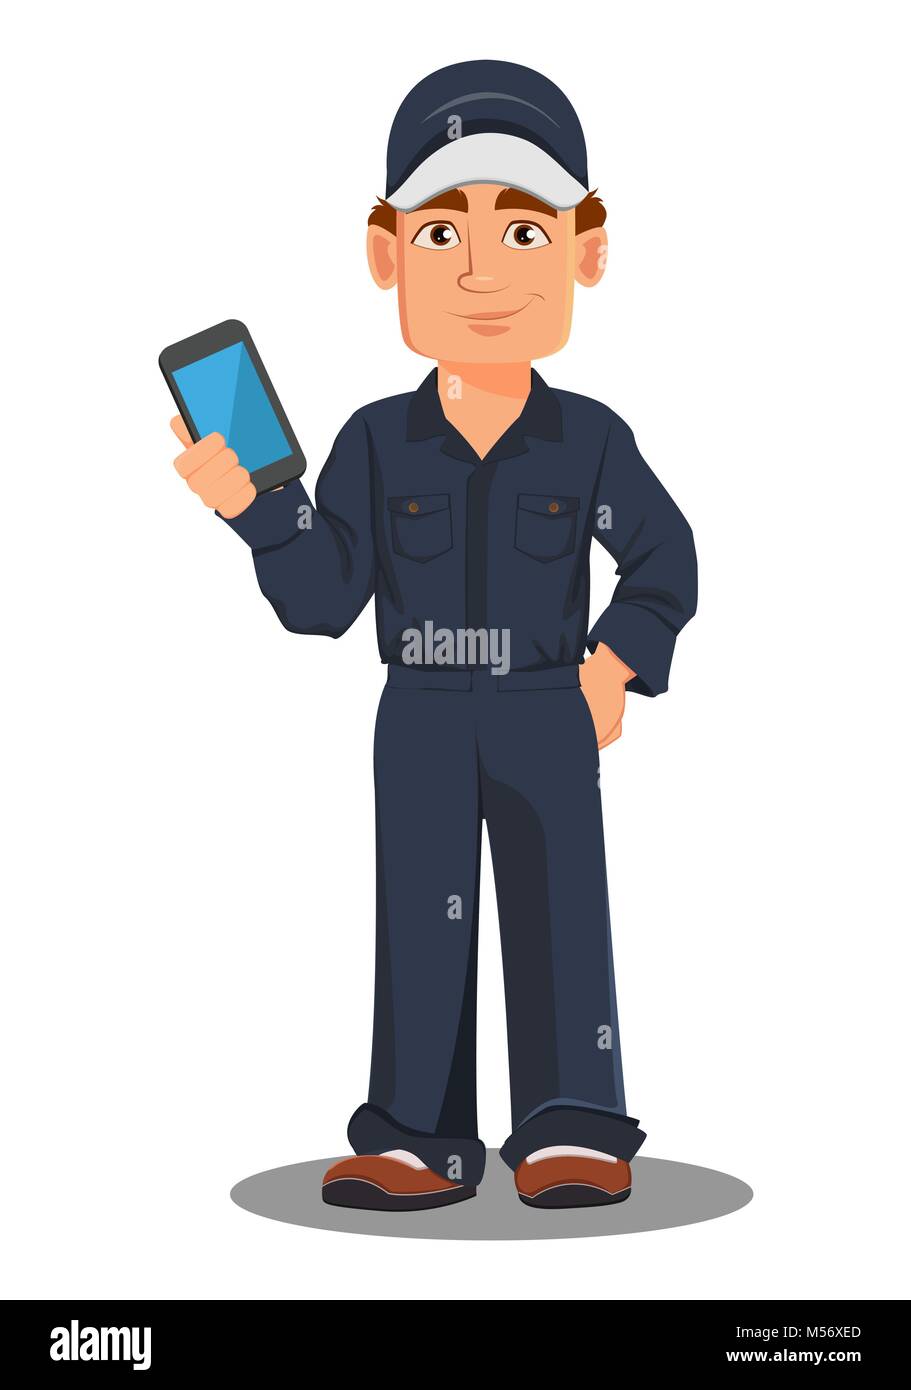 Professional auto mechanic in uniform. Smiling cartoon character holding smartphone. Expert service worker. Vector illustration Stock Vector